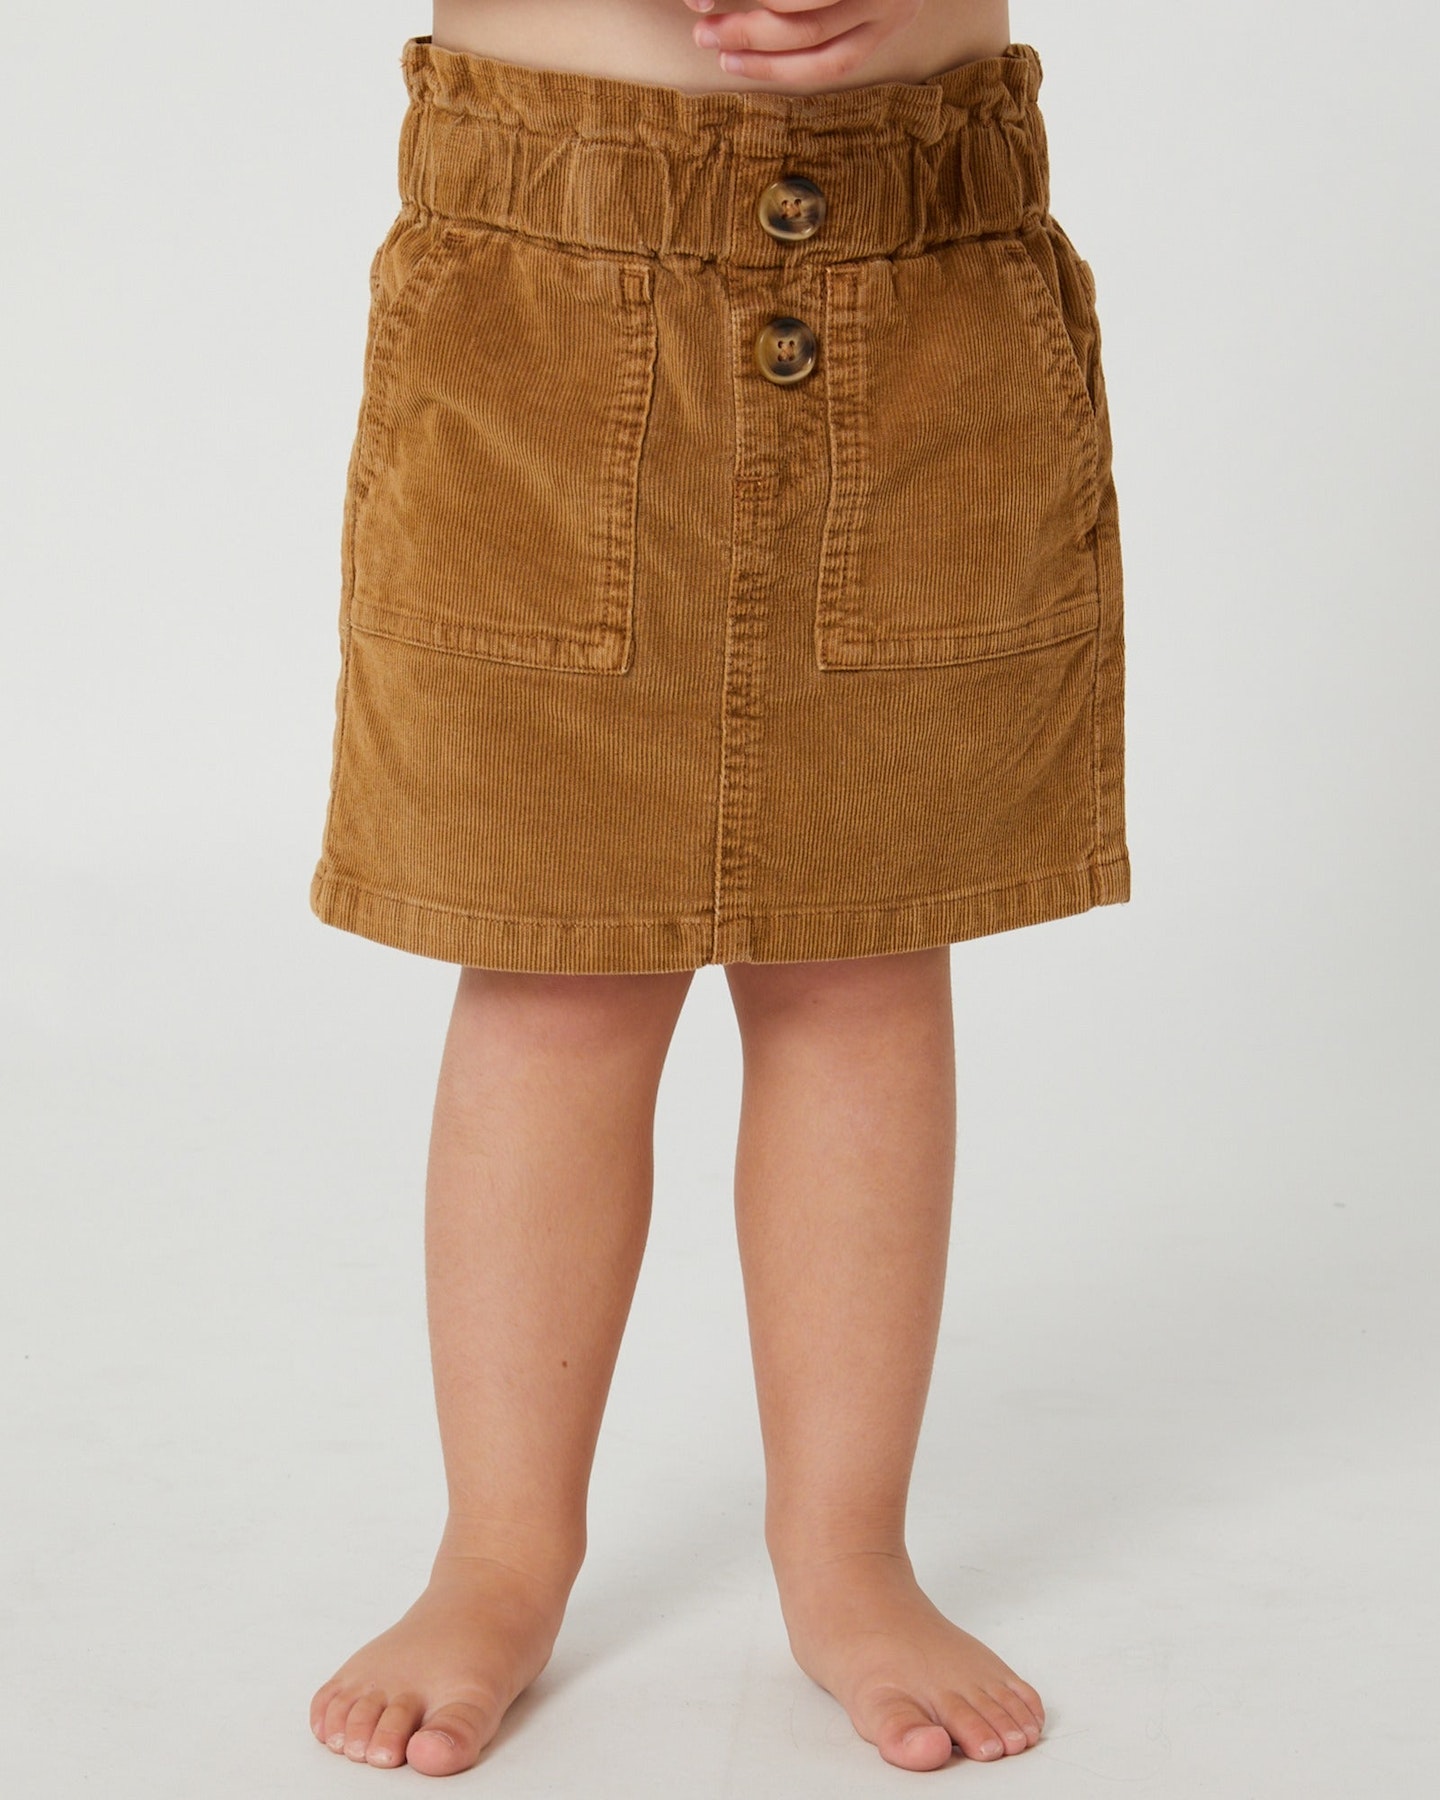 Girl's Bera Corduroy Skirt, Size 3T-6